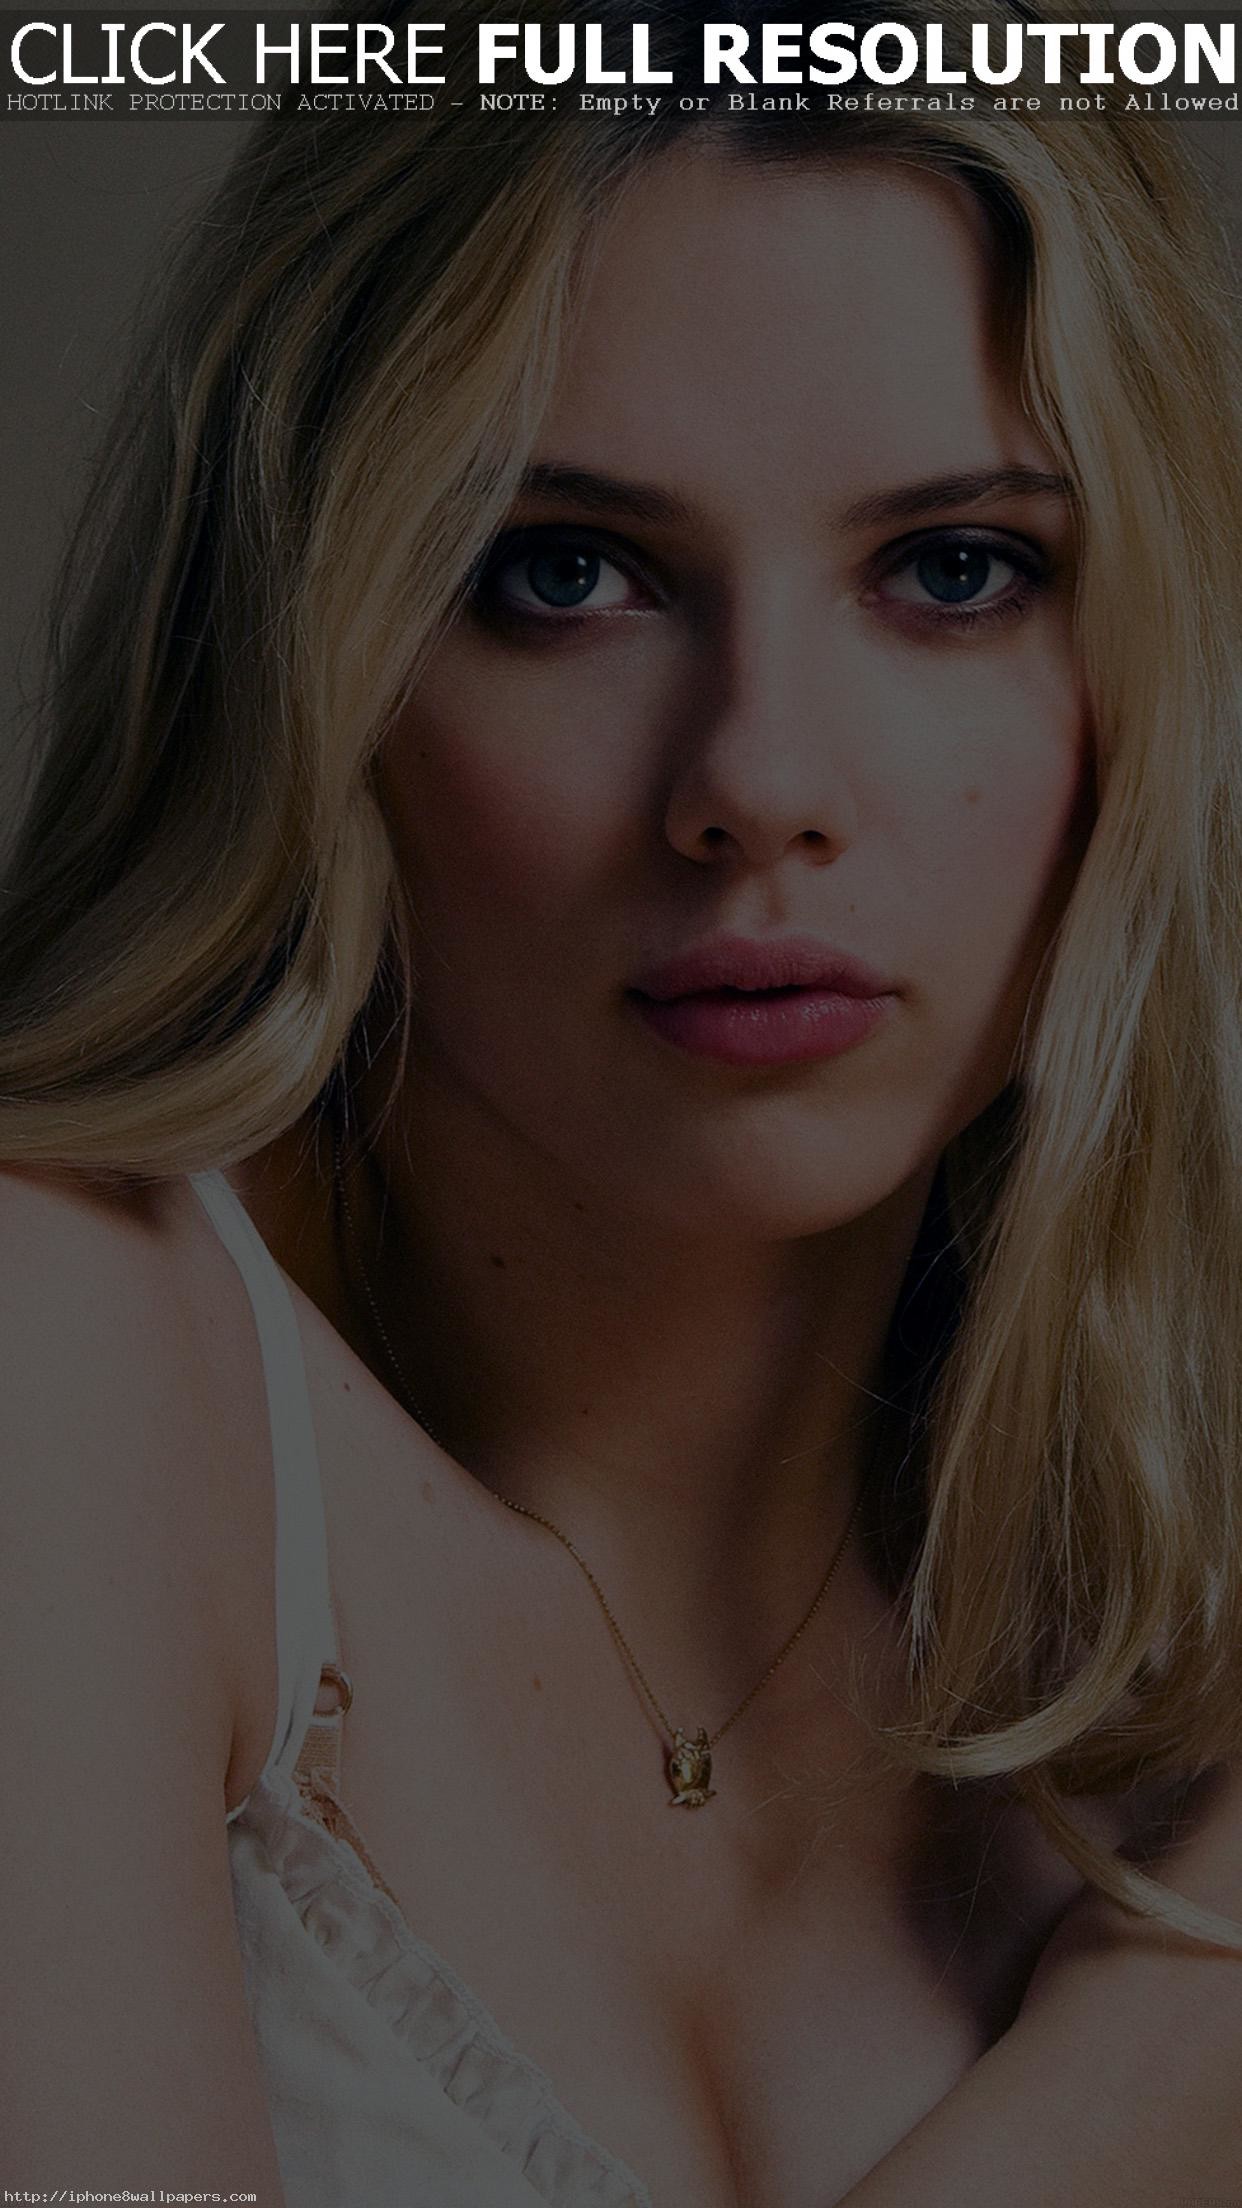 Scarlett Johansson Sexy Actress Star Android Wallpaper - Warren Street Tube Station - HD Wallpaper 